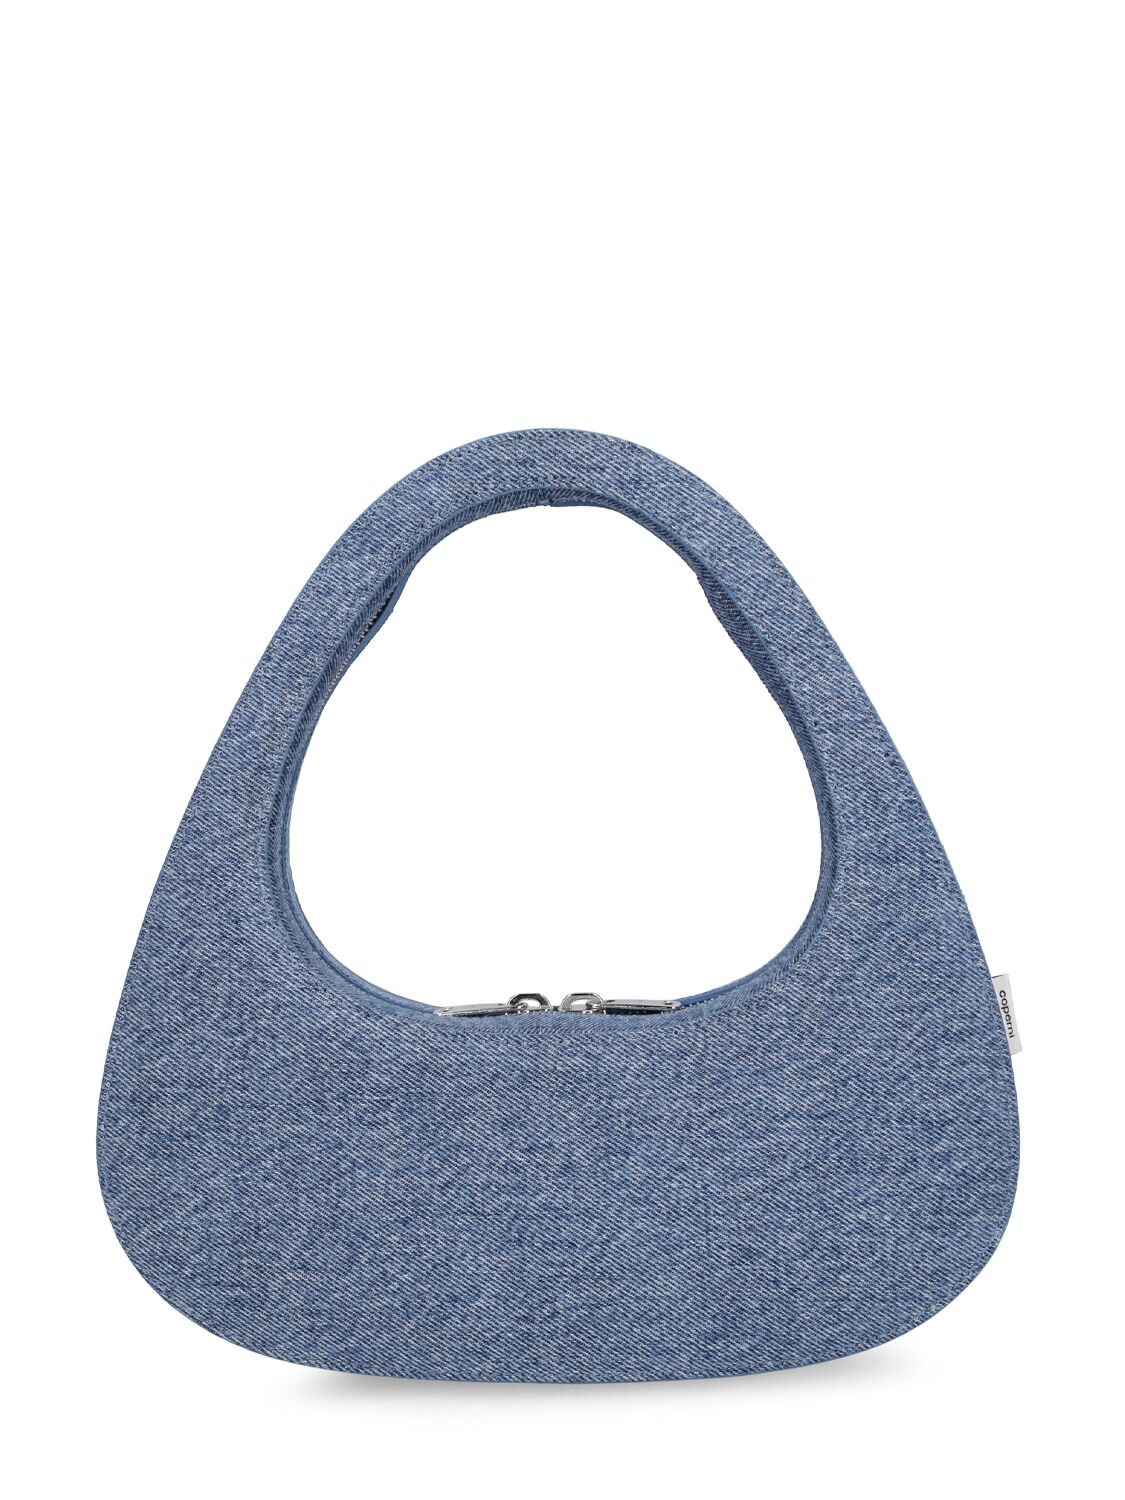 Coperni Swipe Denim Top Handle Bag In Washed Blue